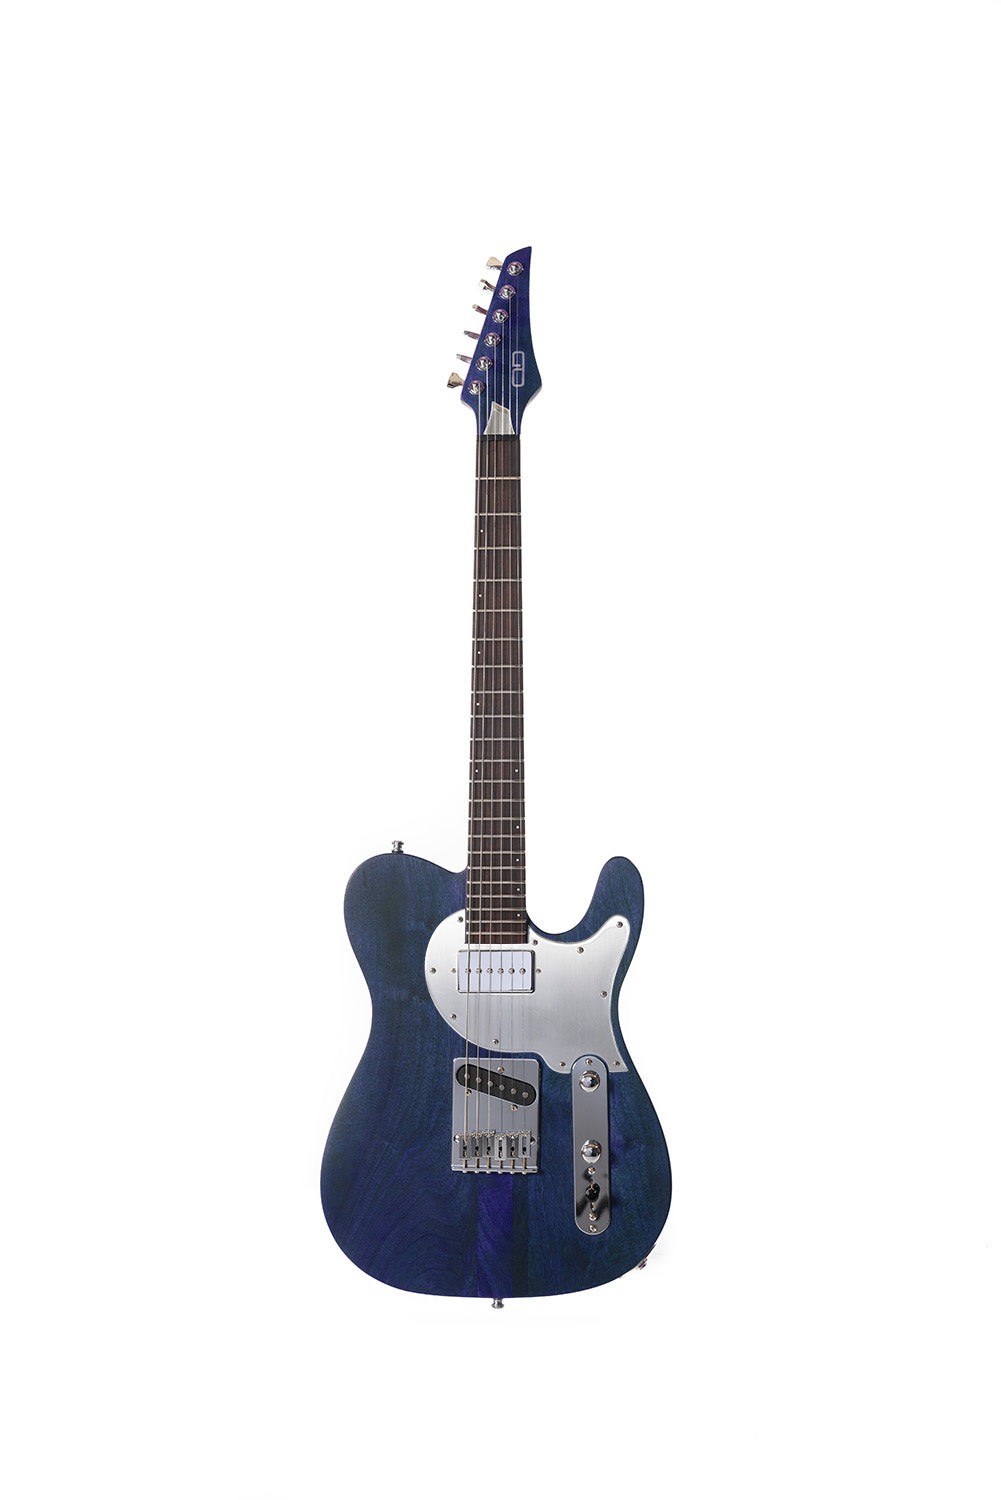 TC_Walnut_Deep_Blue_front_De_Leeuw_Guitars_Paris_Made_in_France_Luthier_Guitar_Maker_France_Neck_Through_Manche_Traversant